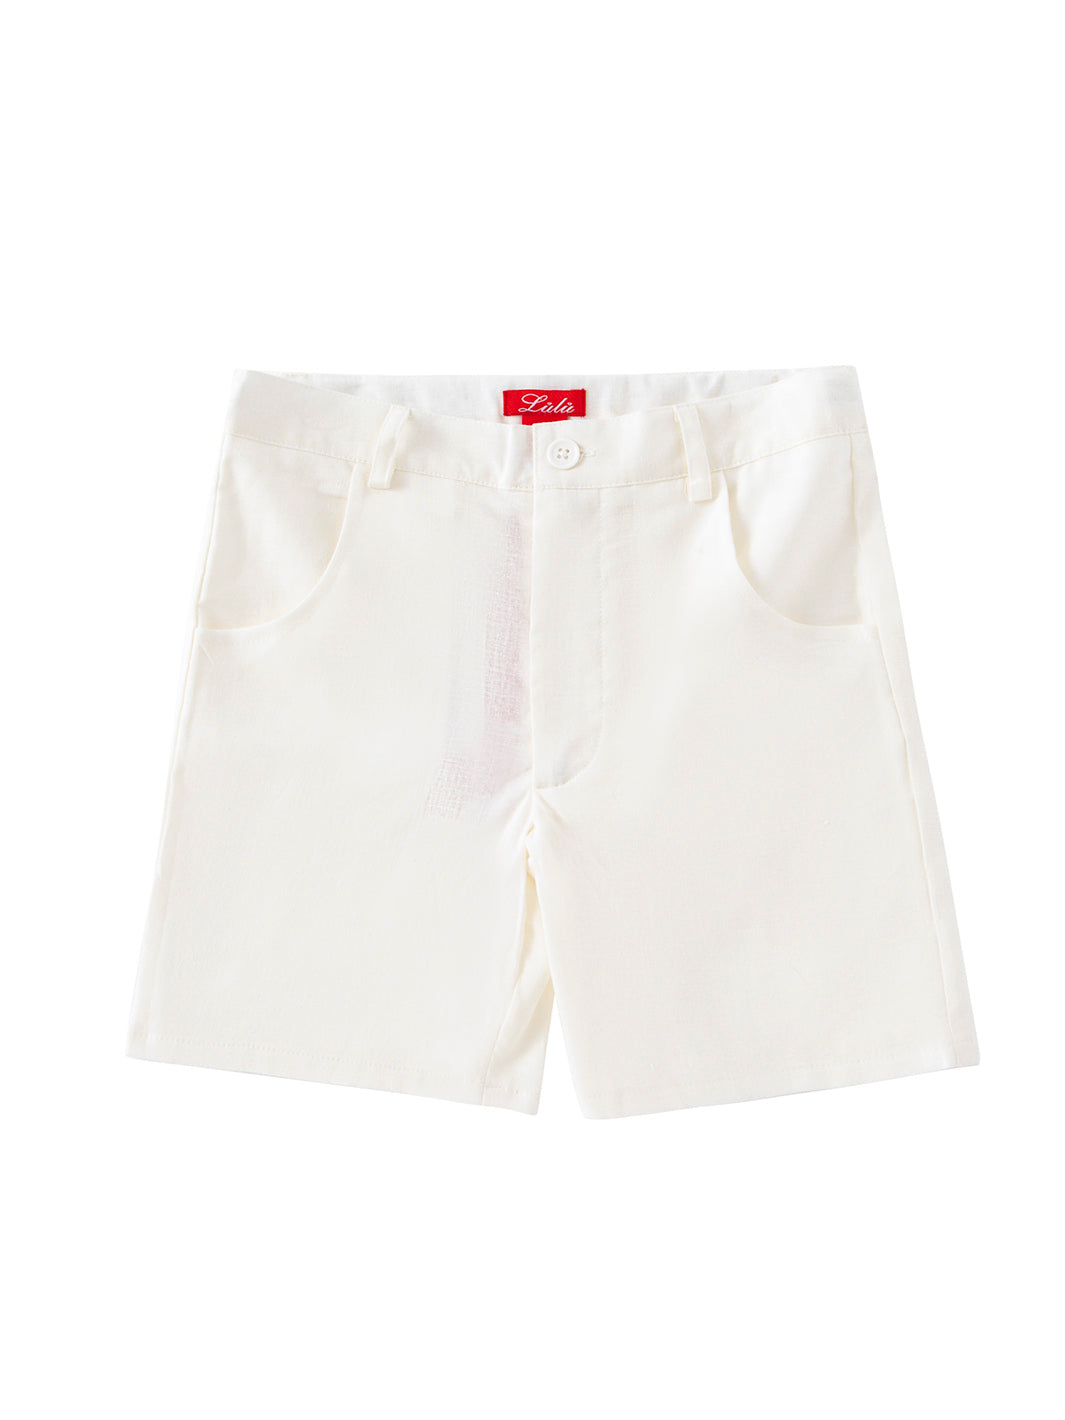 Linen Shorts Pants -  White